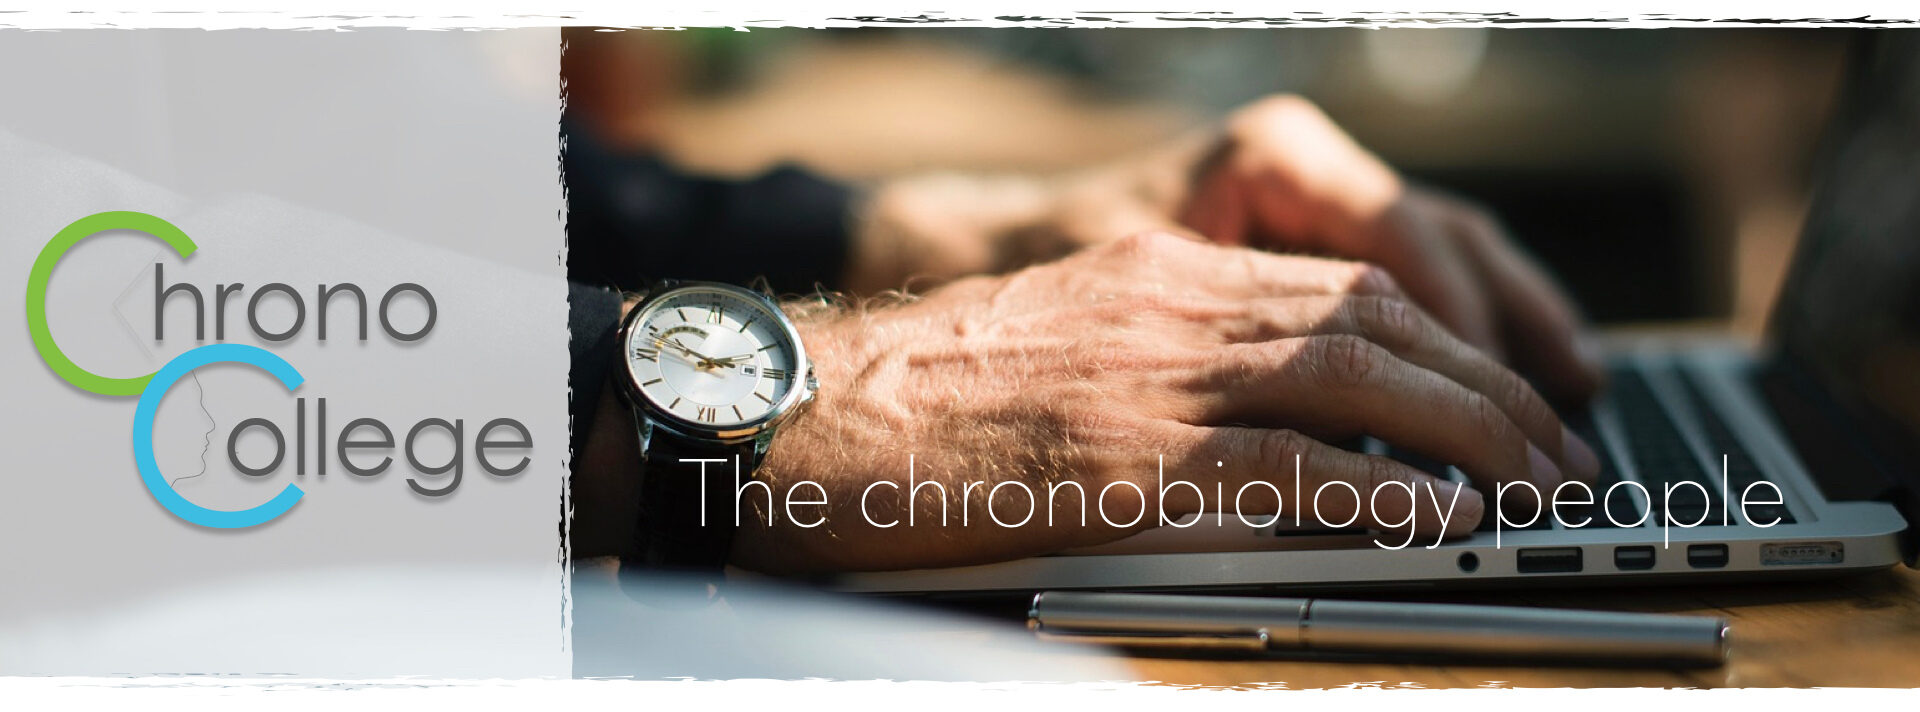 ChronoCollege – The chronobiology people